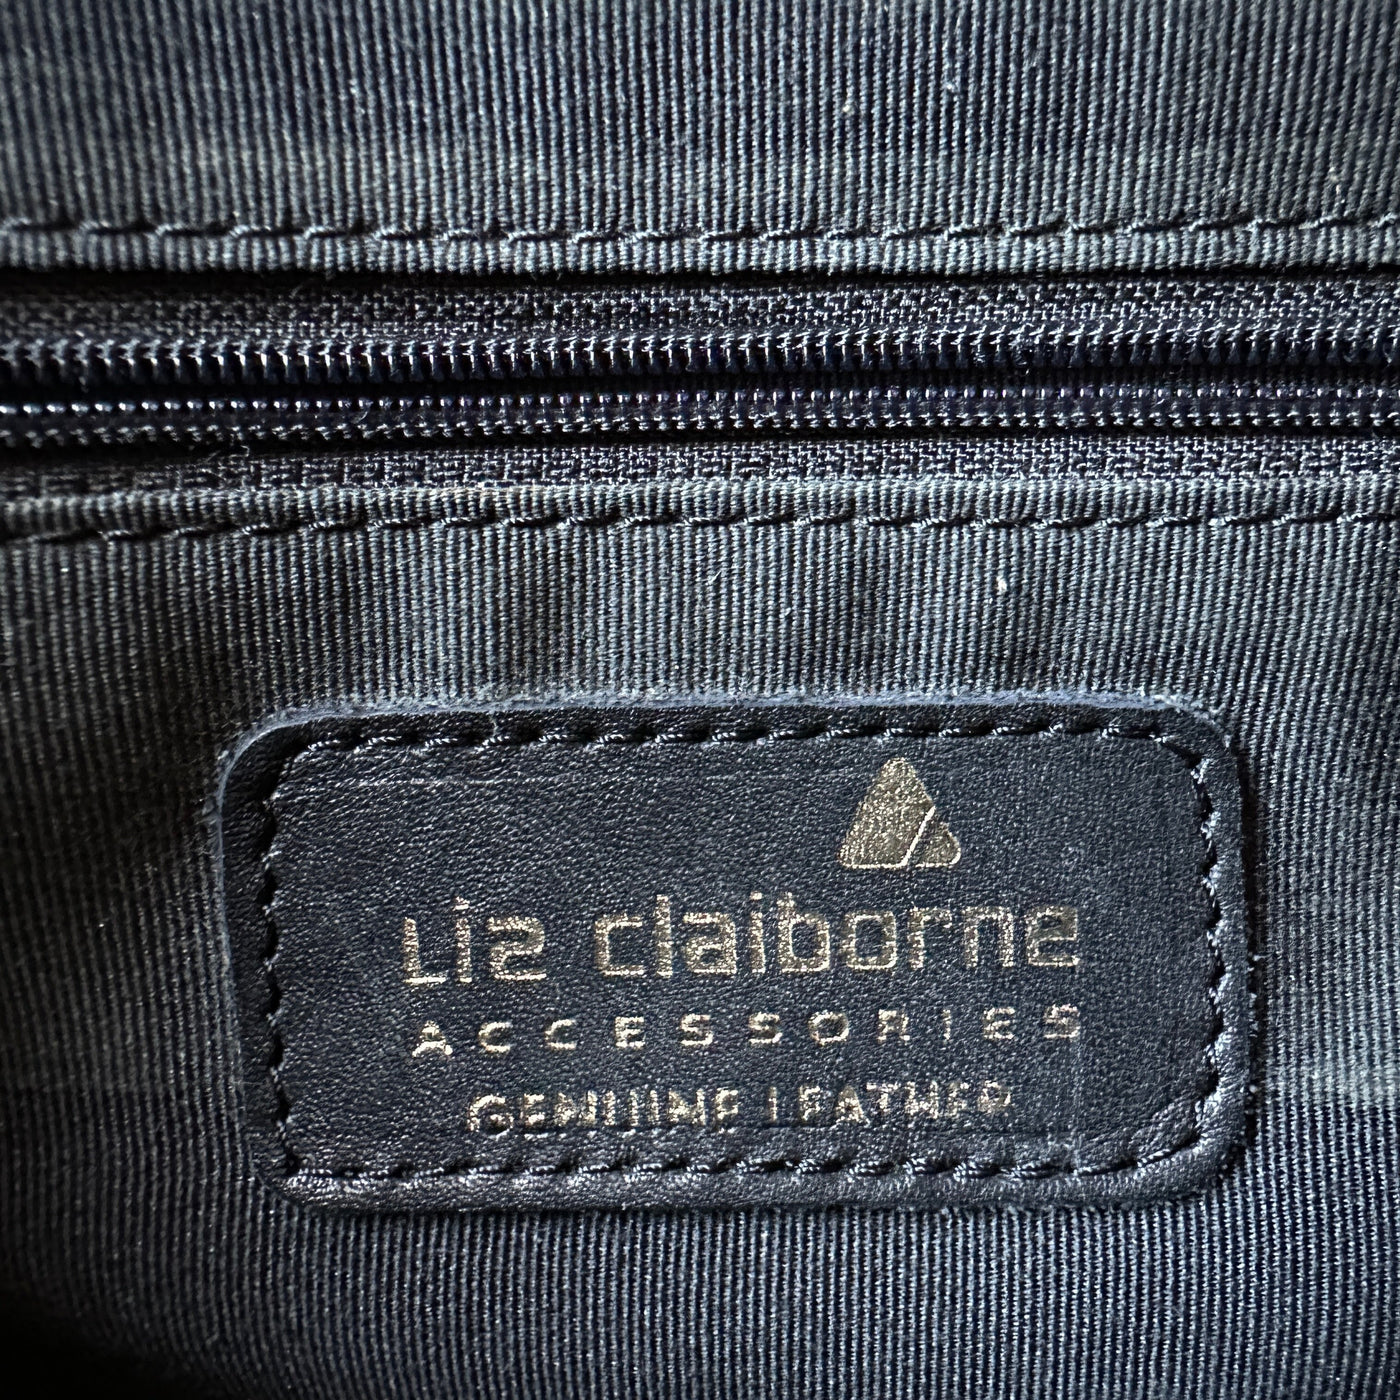 “Liz Claibourne Accessories” Black Genuine Leather Handbag with Gold Fleur Accents